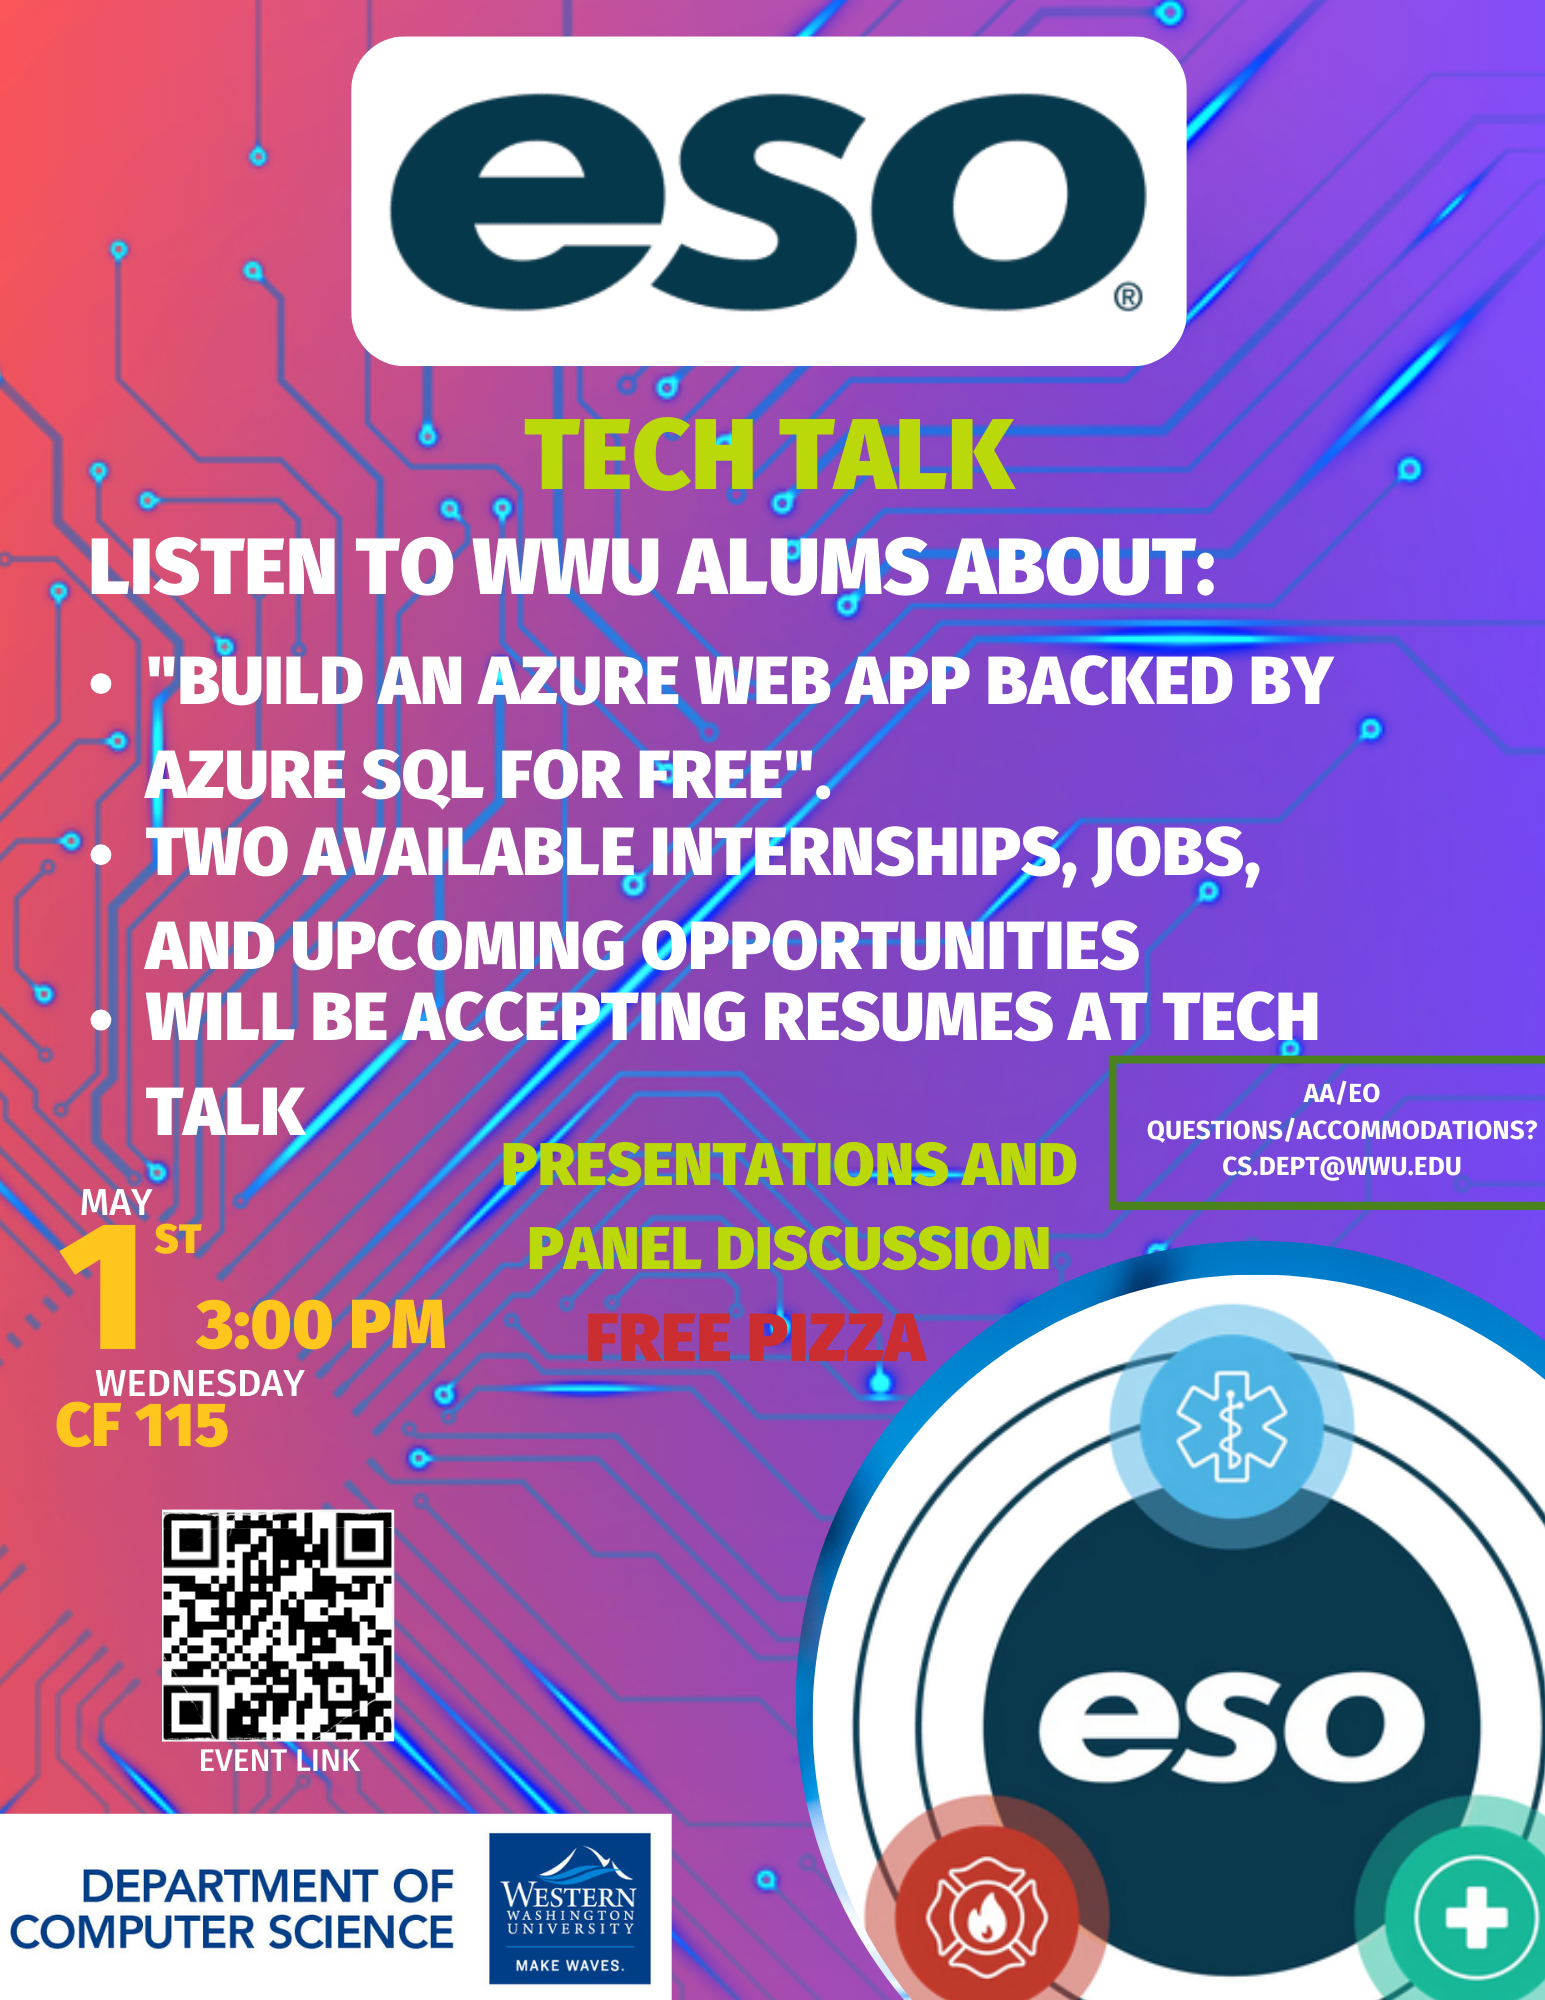 ESO Tech Talk Flyer